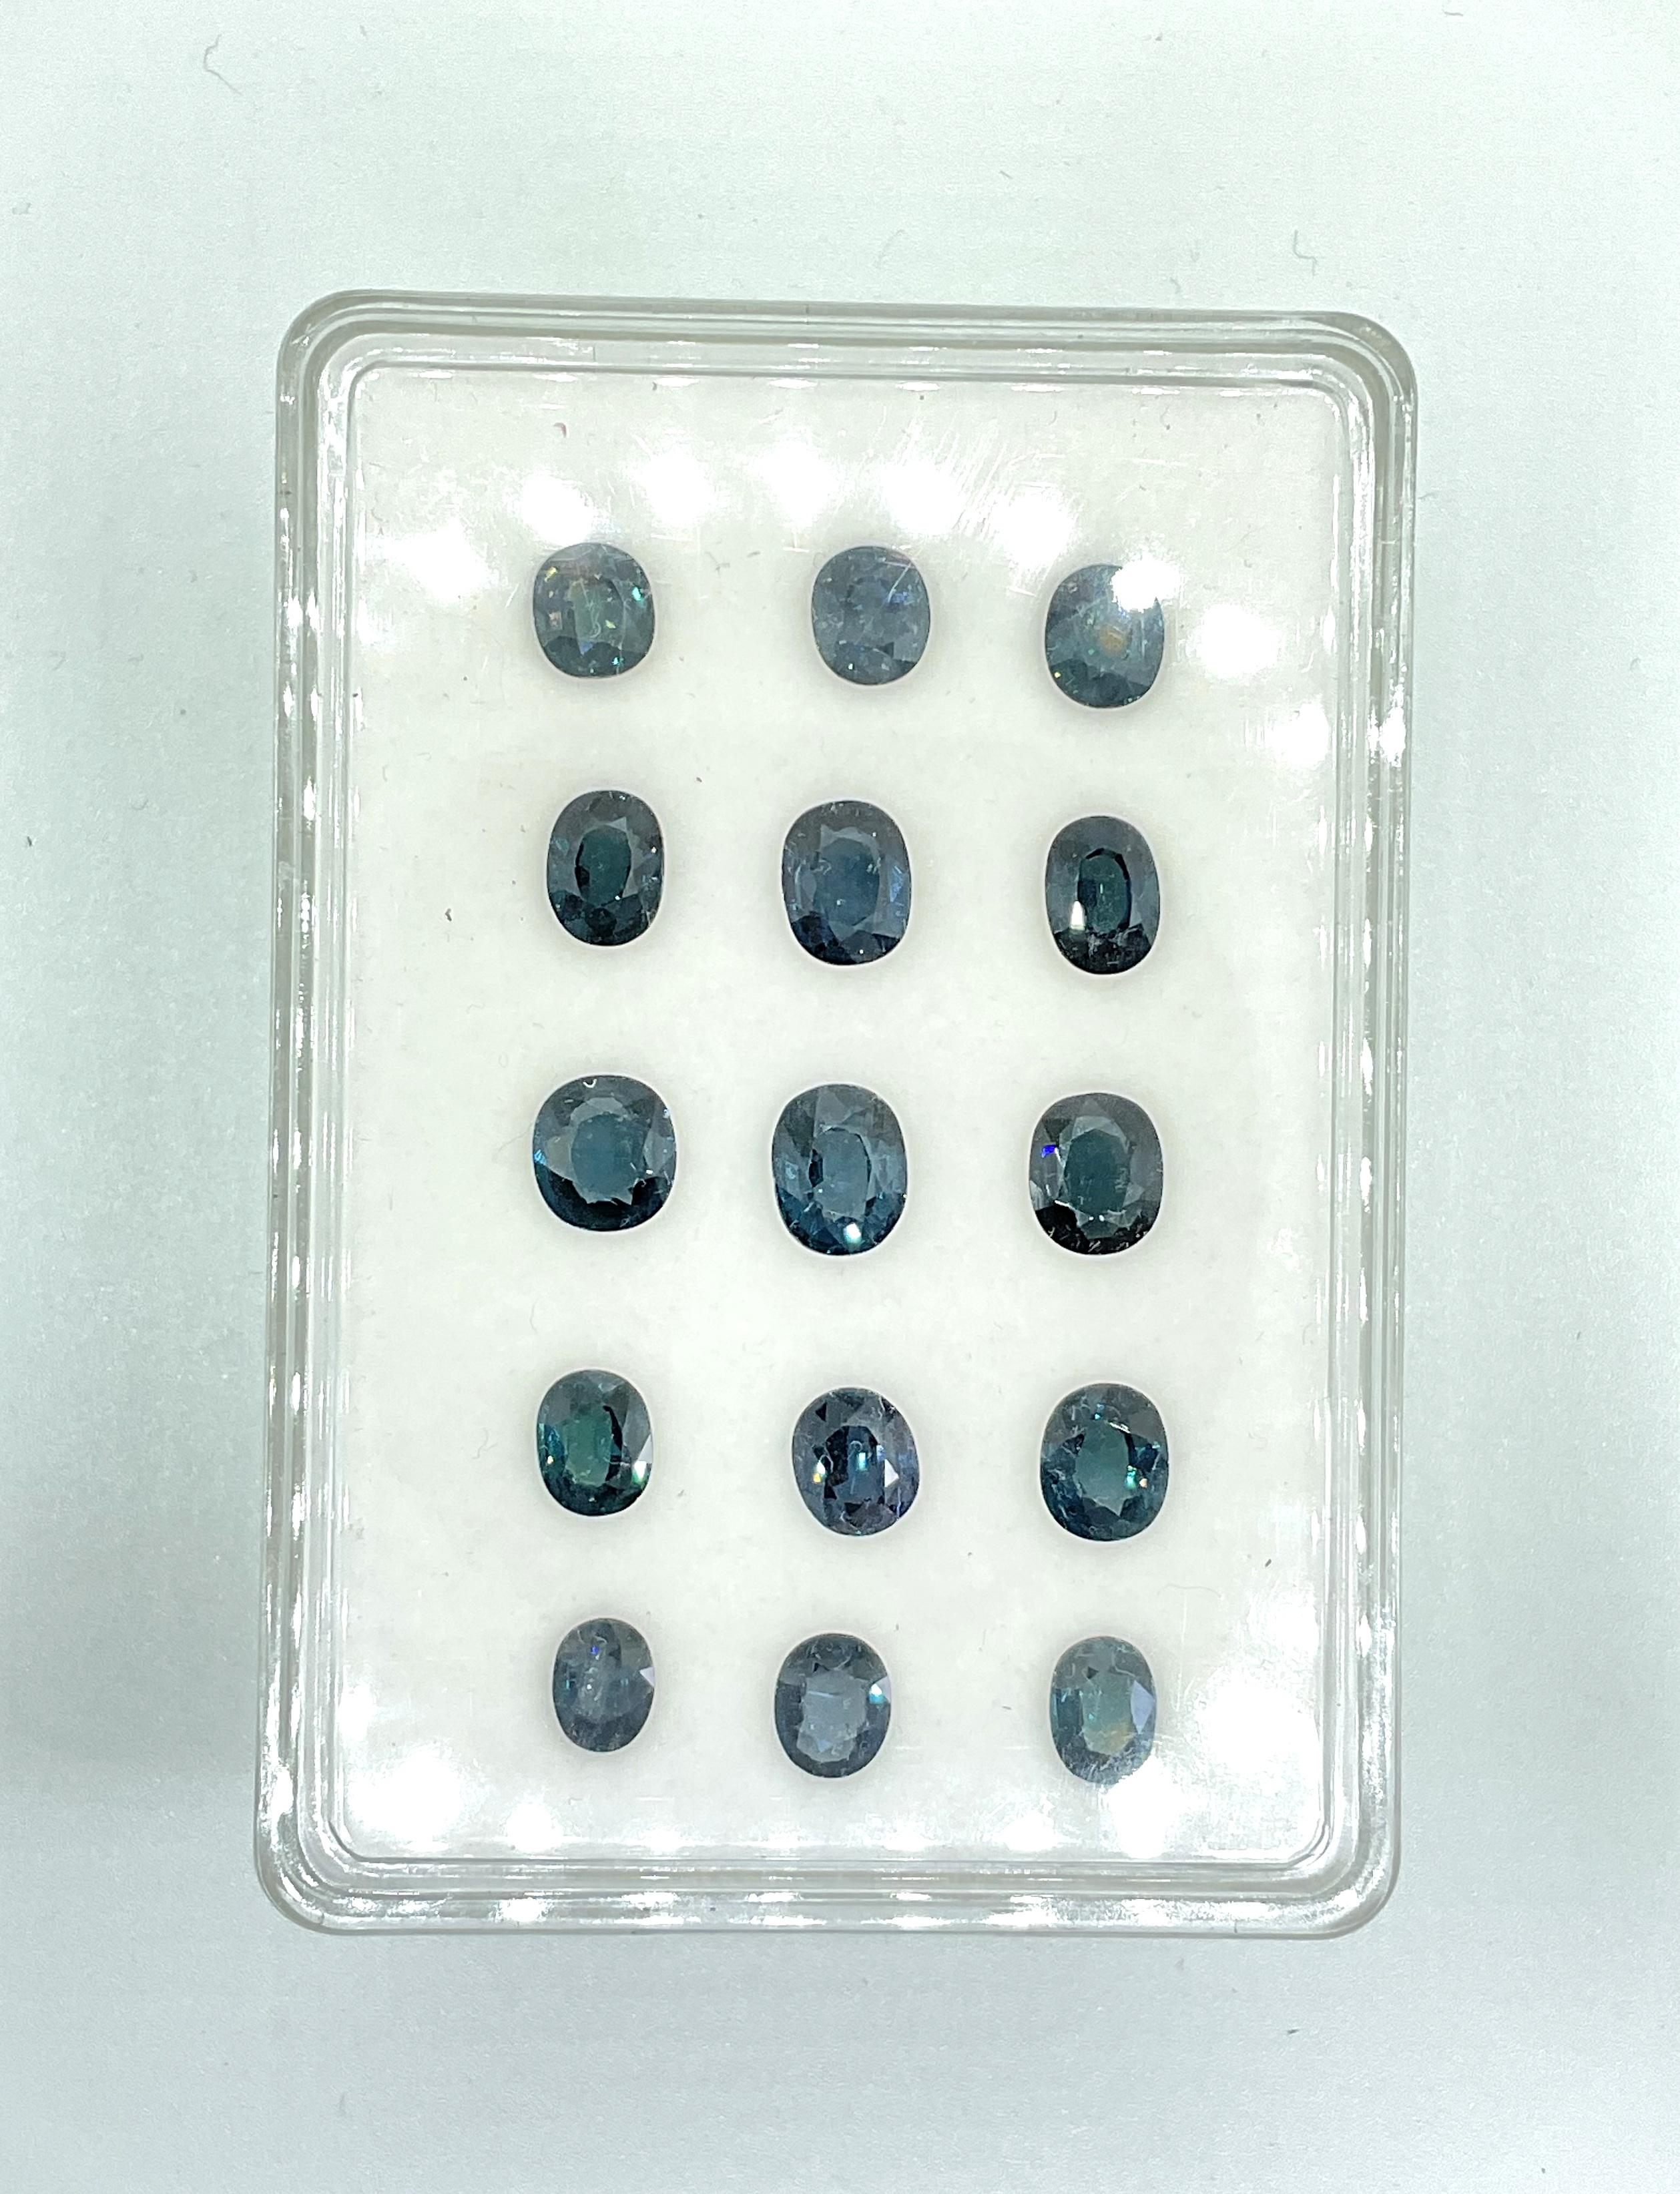 24.30 Carat Blue Spinel Tanzania Oval Faceted Natural Cut stone Fine Jewelry Gem

Poids - 24,30 carats
Taille - 5x7 à 6x8 mm
Forme - Ovale
Quantité - 15 pièces